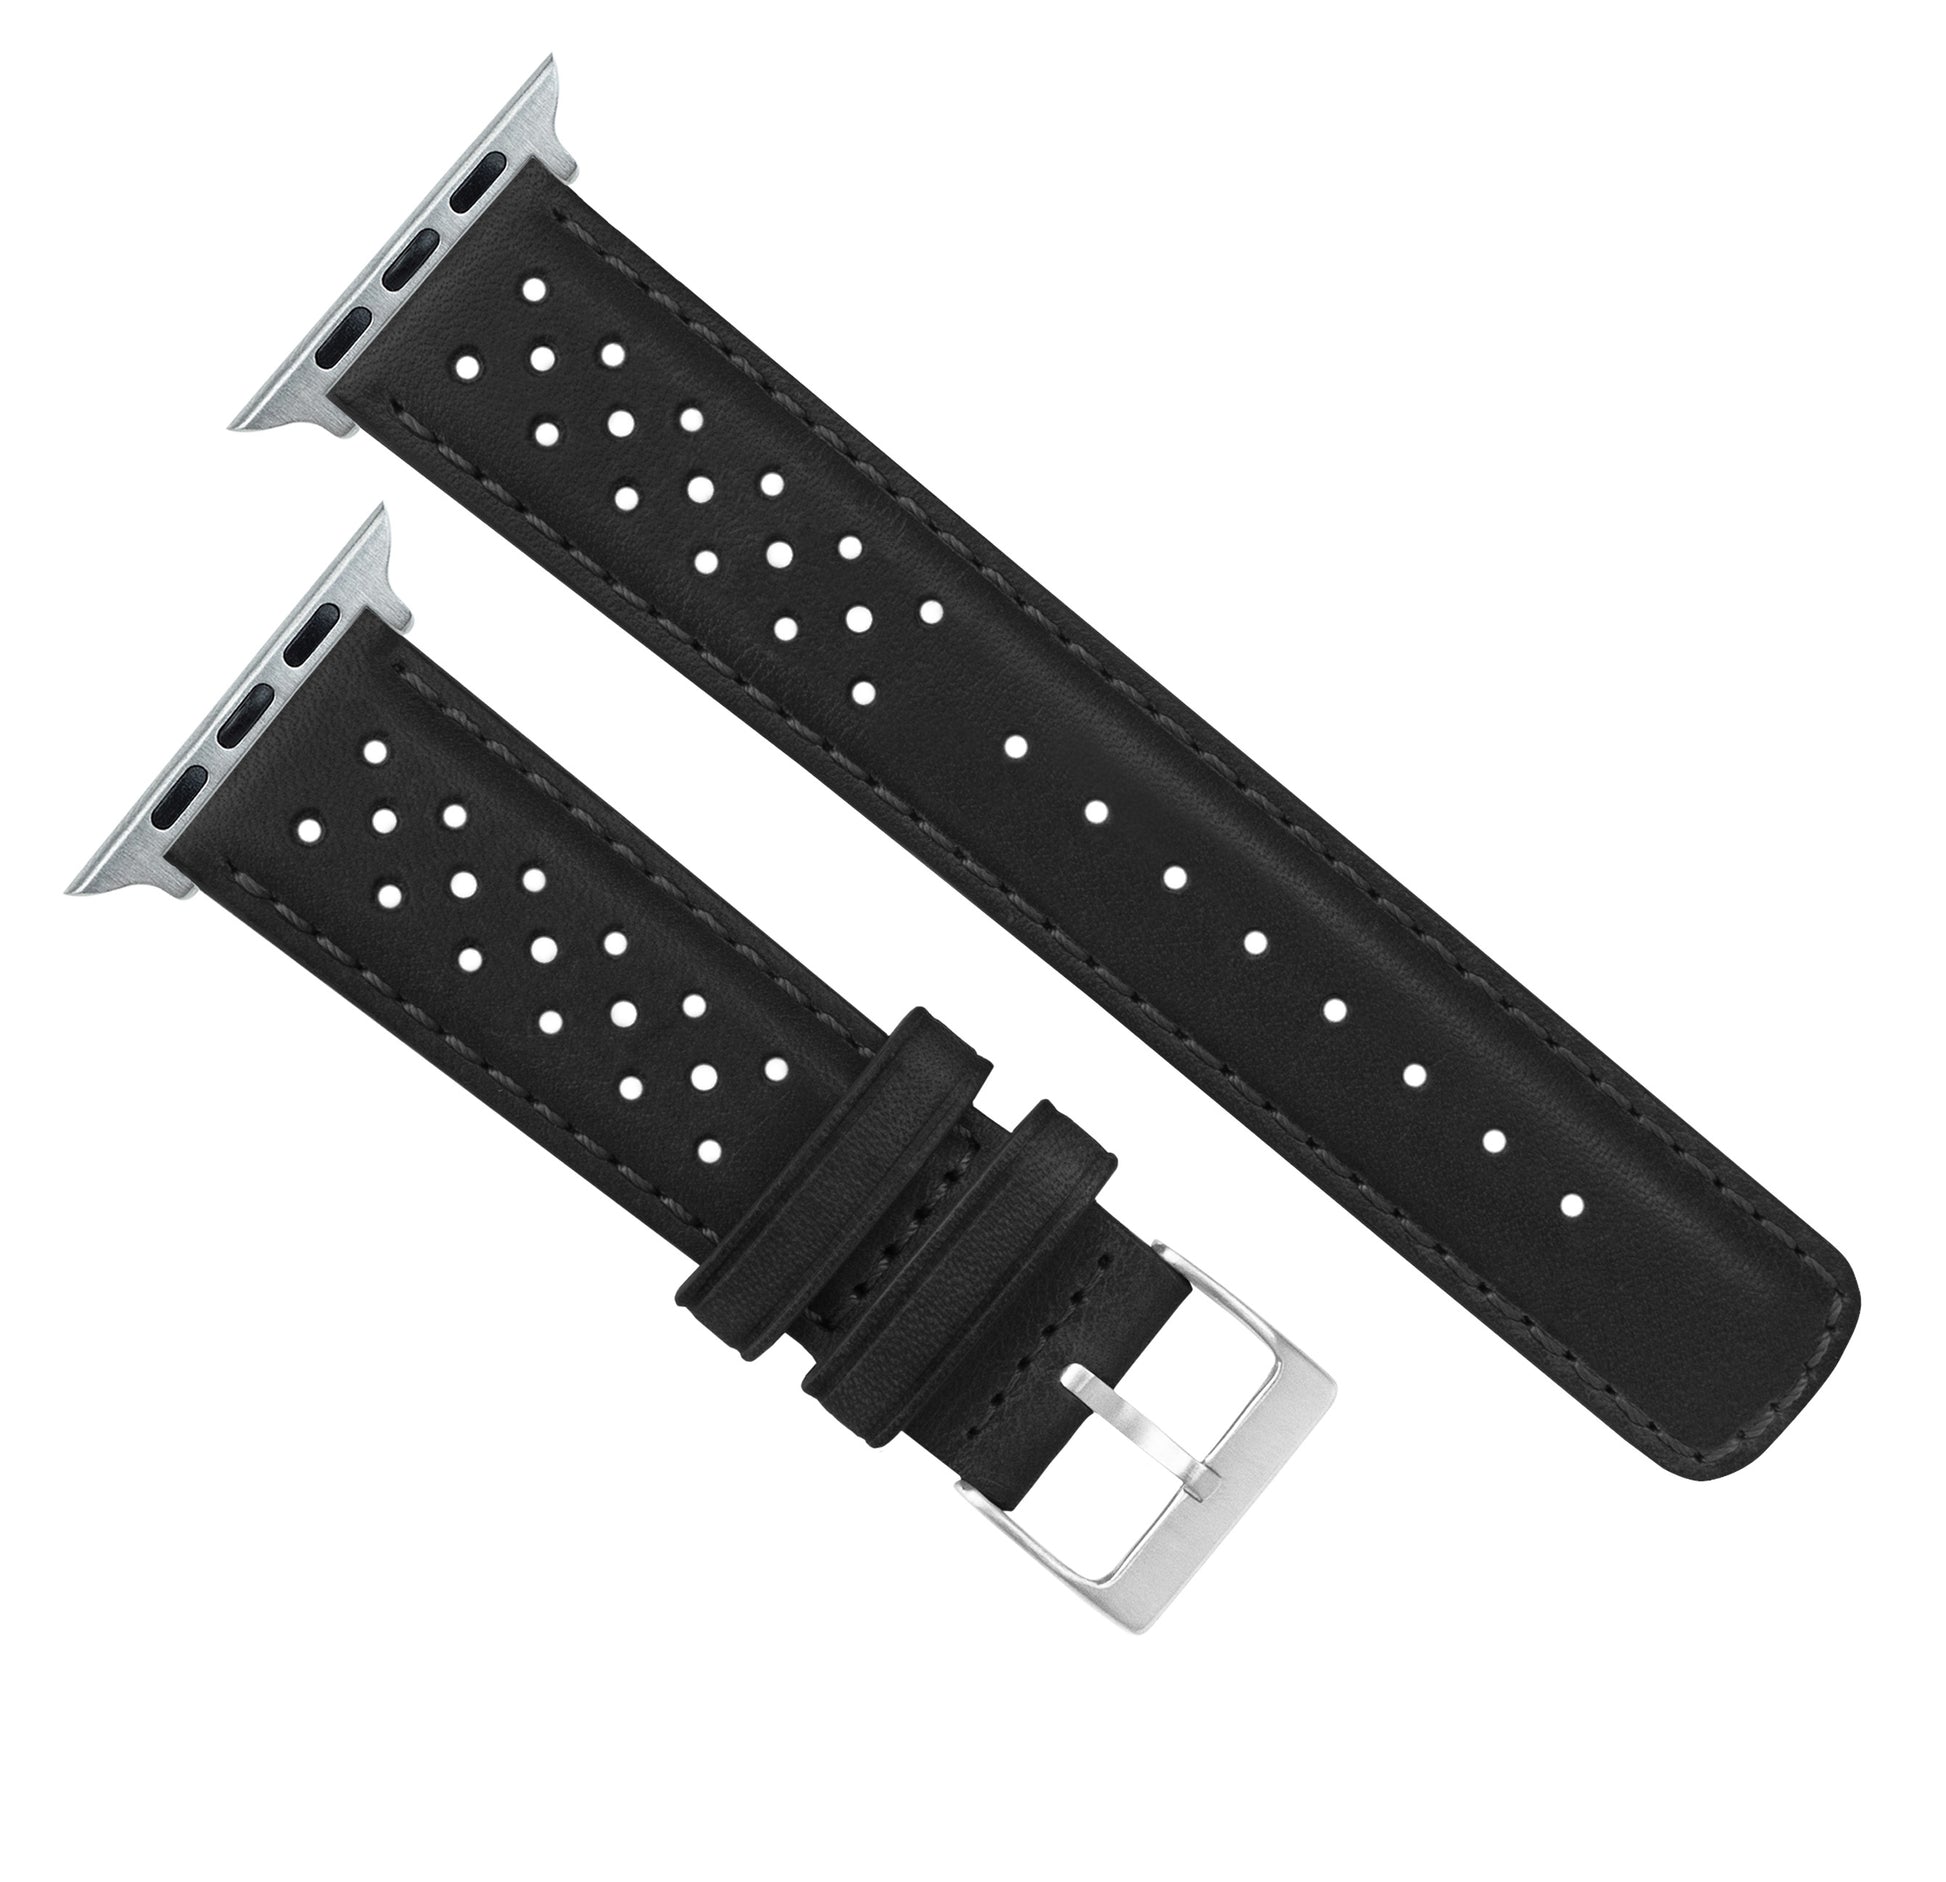 Apple Watch | Black Racing Horween Leather - Barton Watch Bands